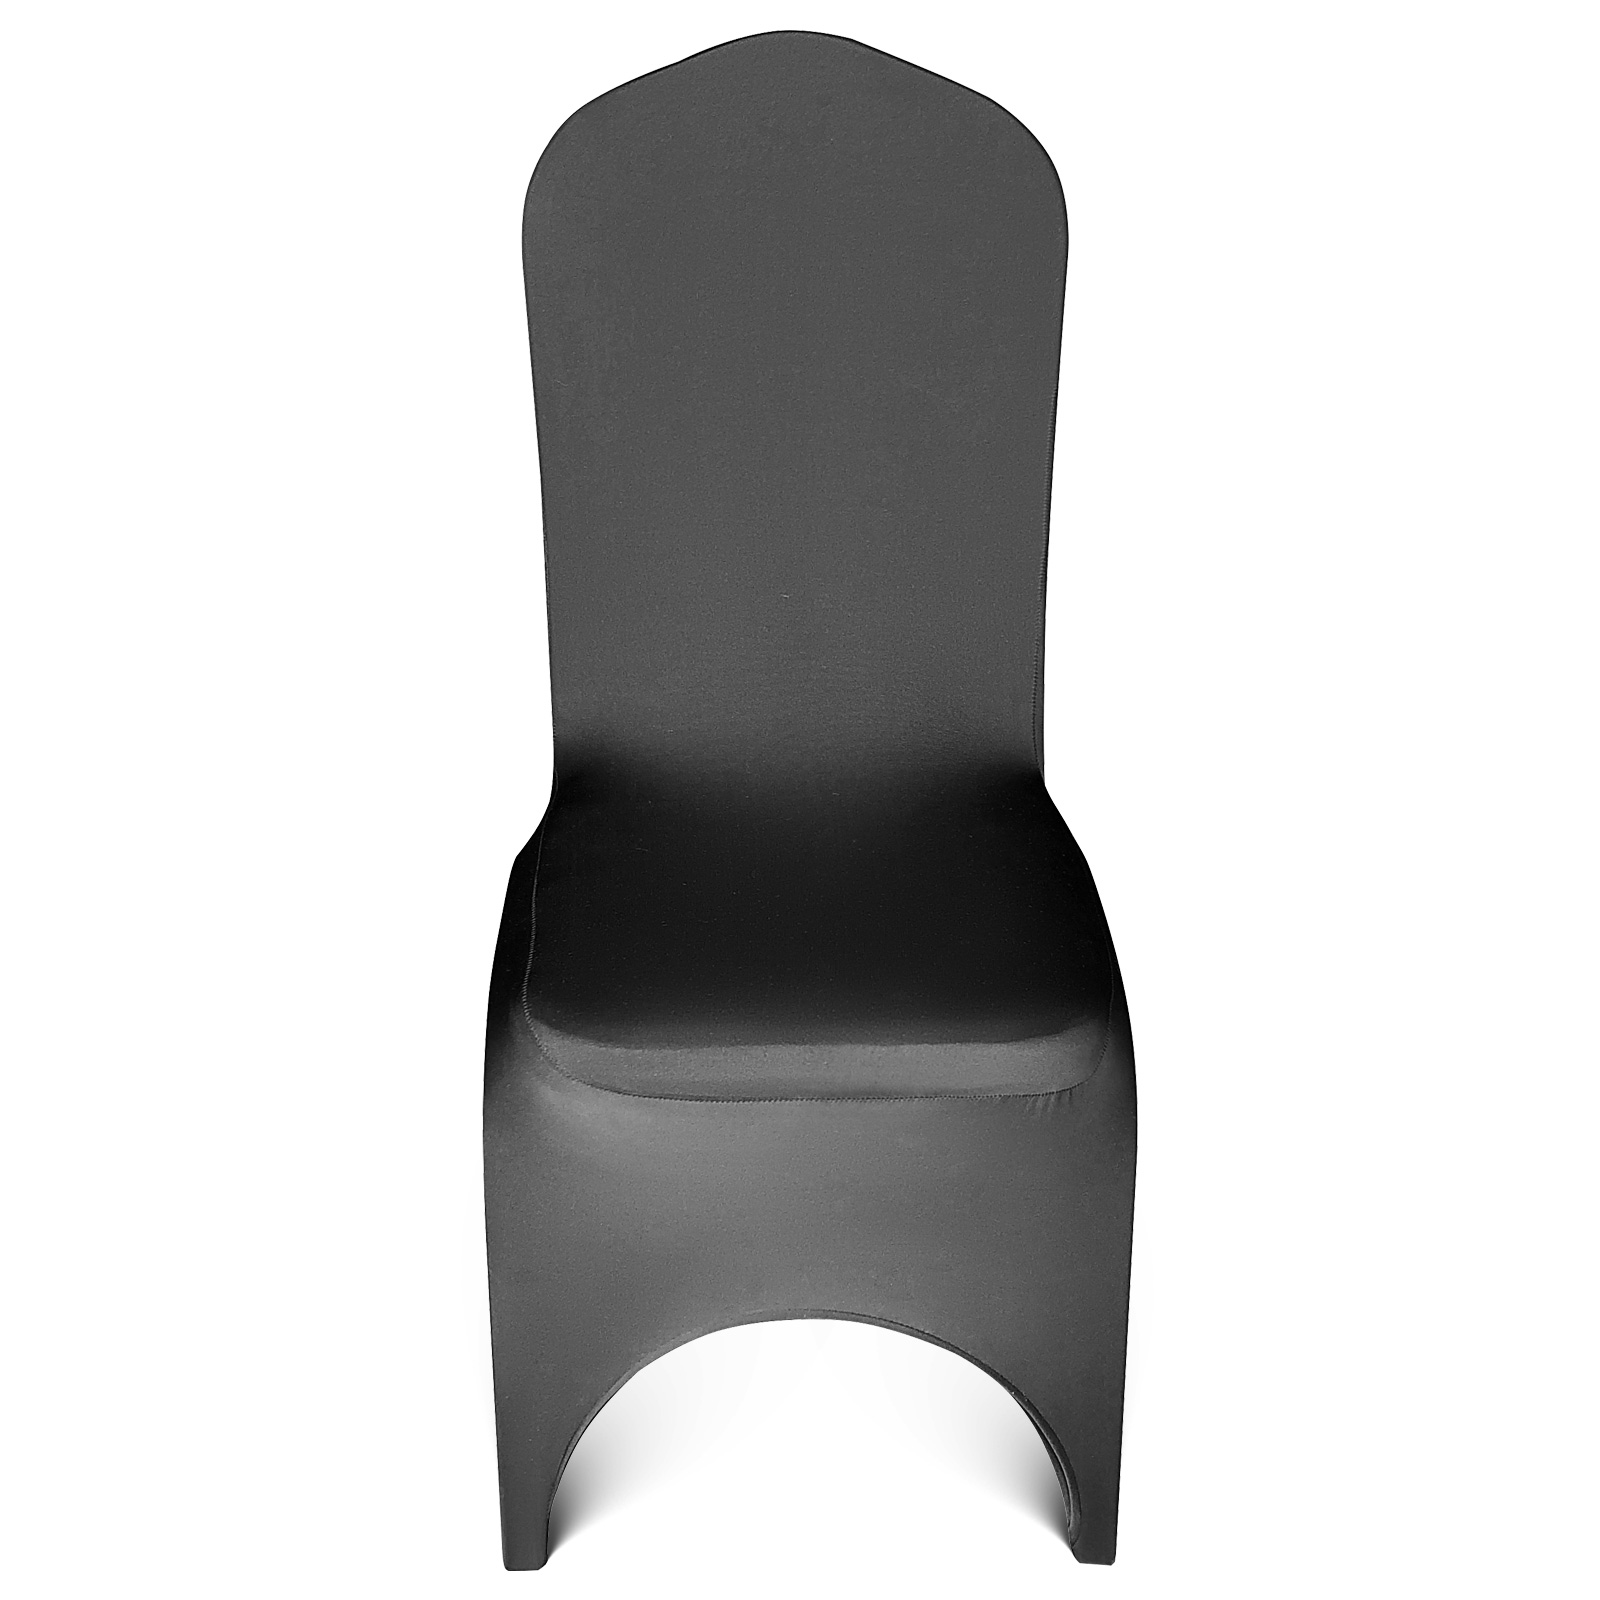  ManMengJi Spandex Folding Chair Covers, Black Folding